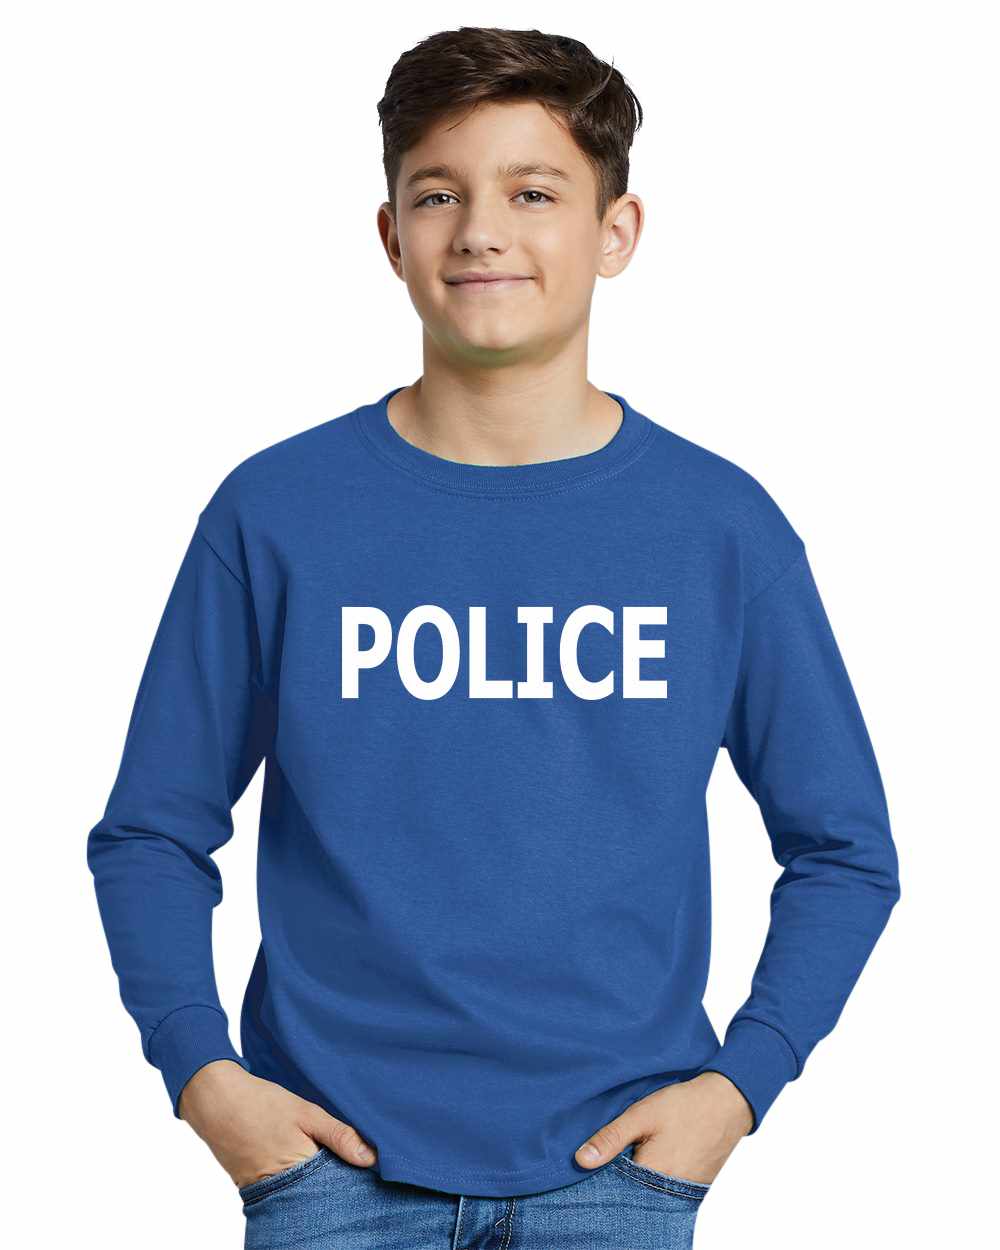 POLICE on Youth Long Sleeve Shirt